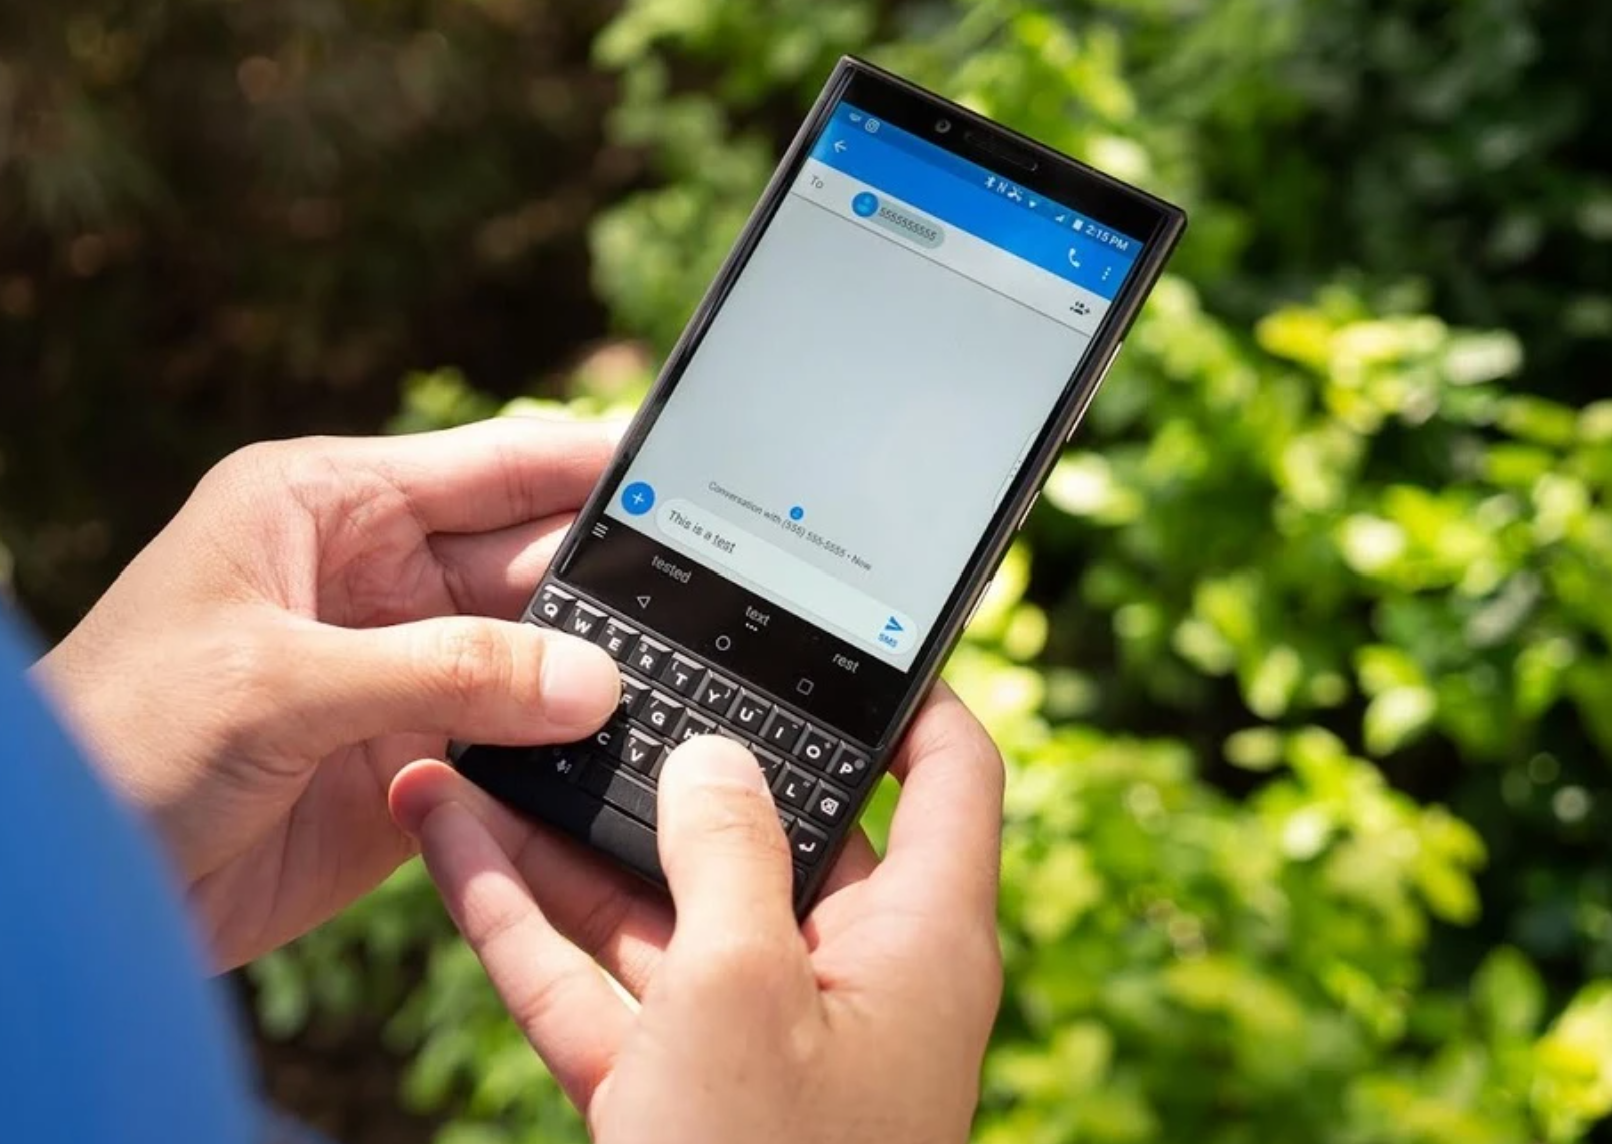 Blackberry KEY2 look-alike, Unihertz Titan Slim specs surface ahead of